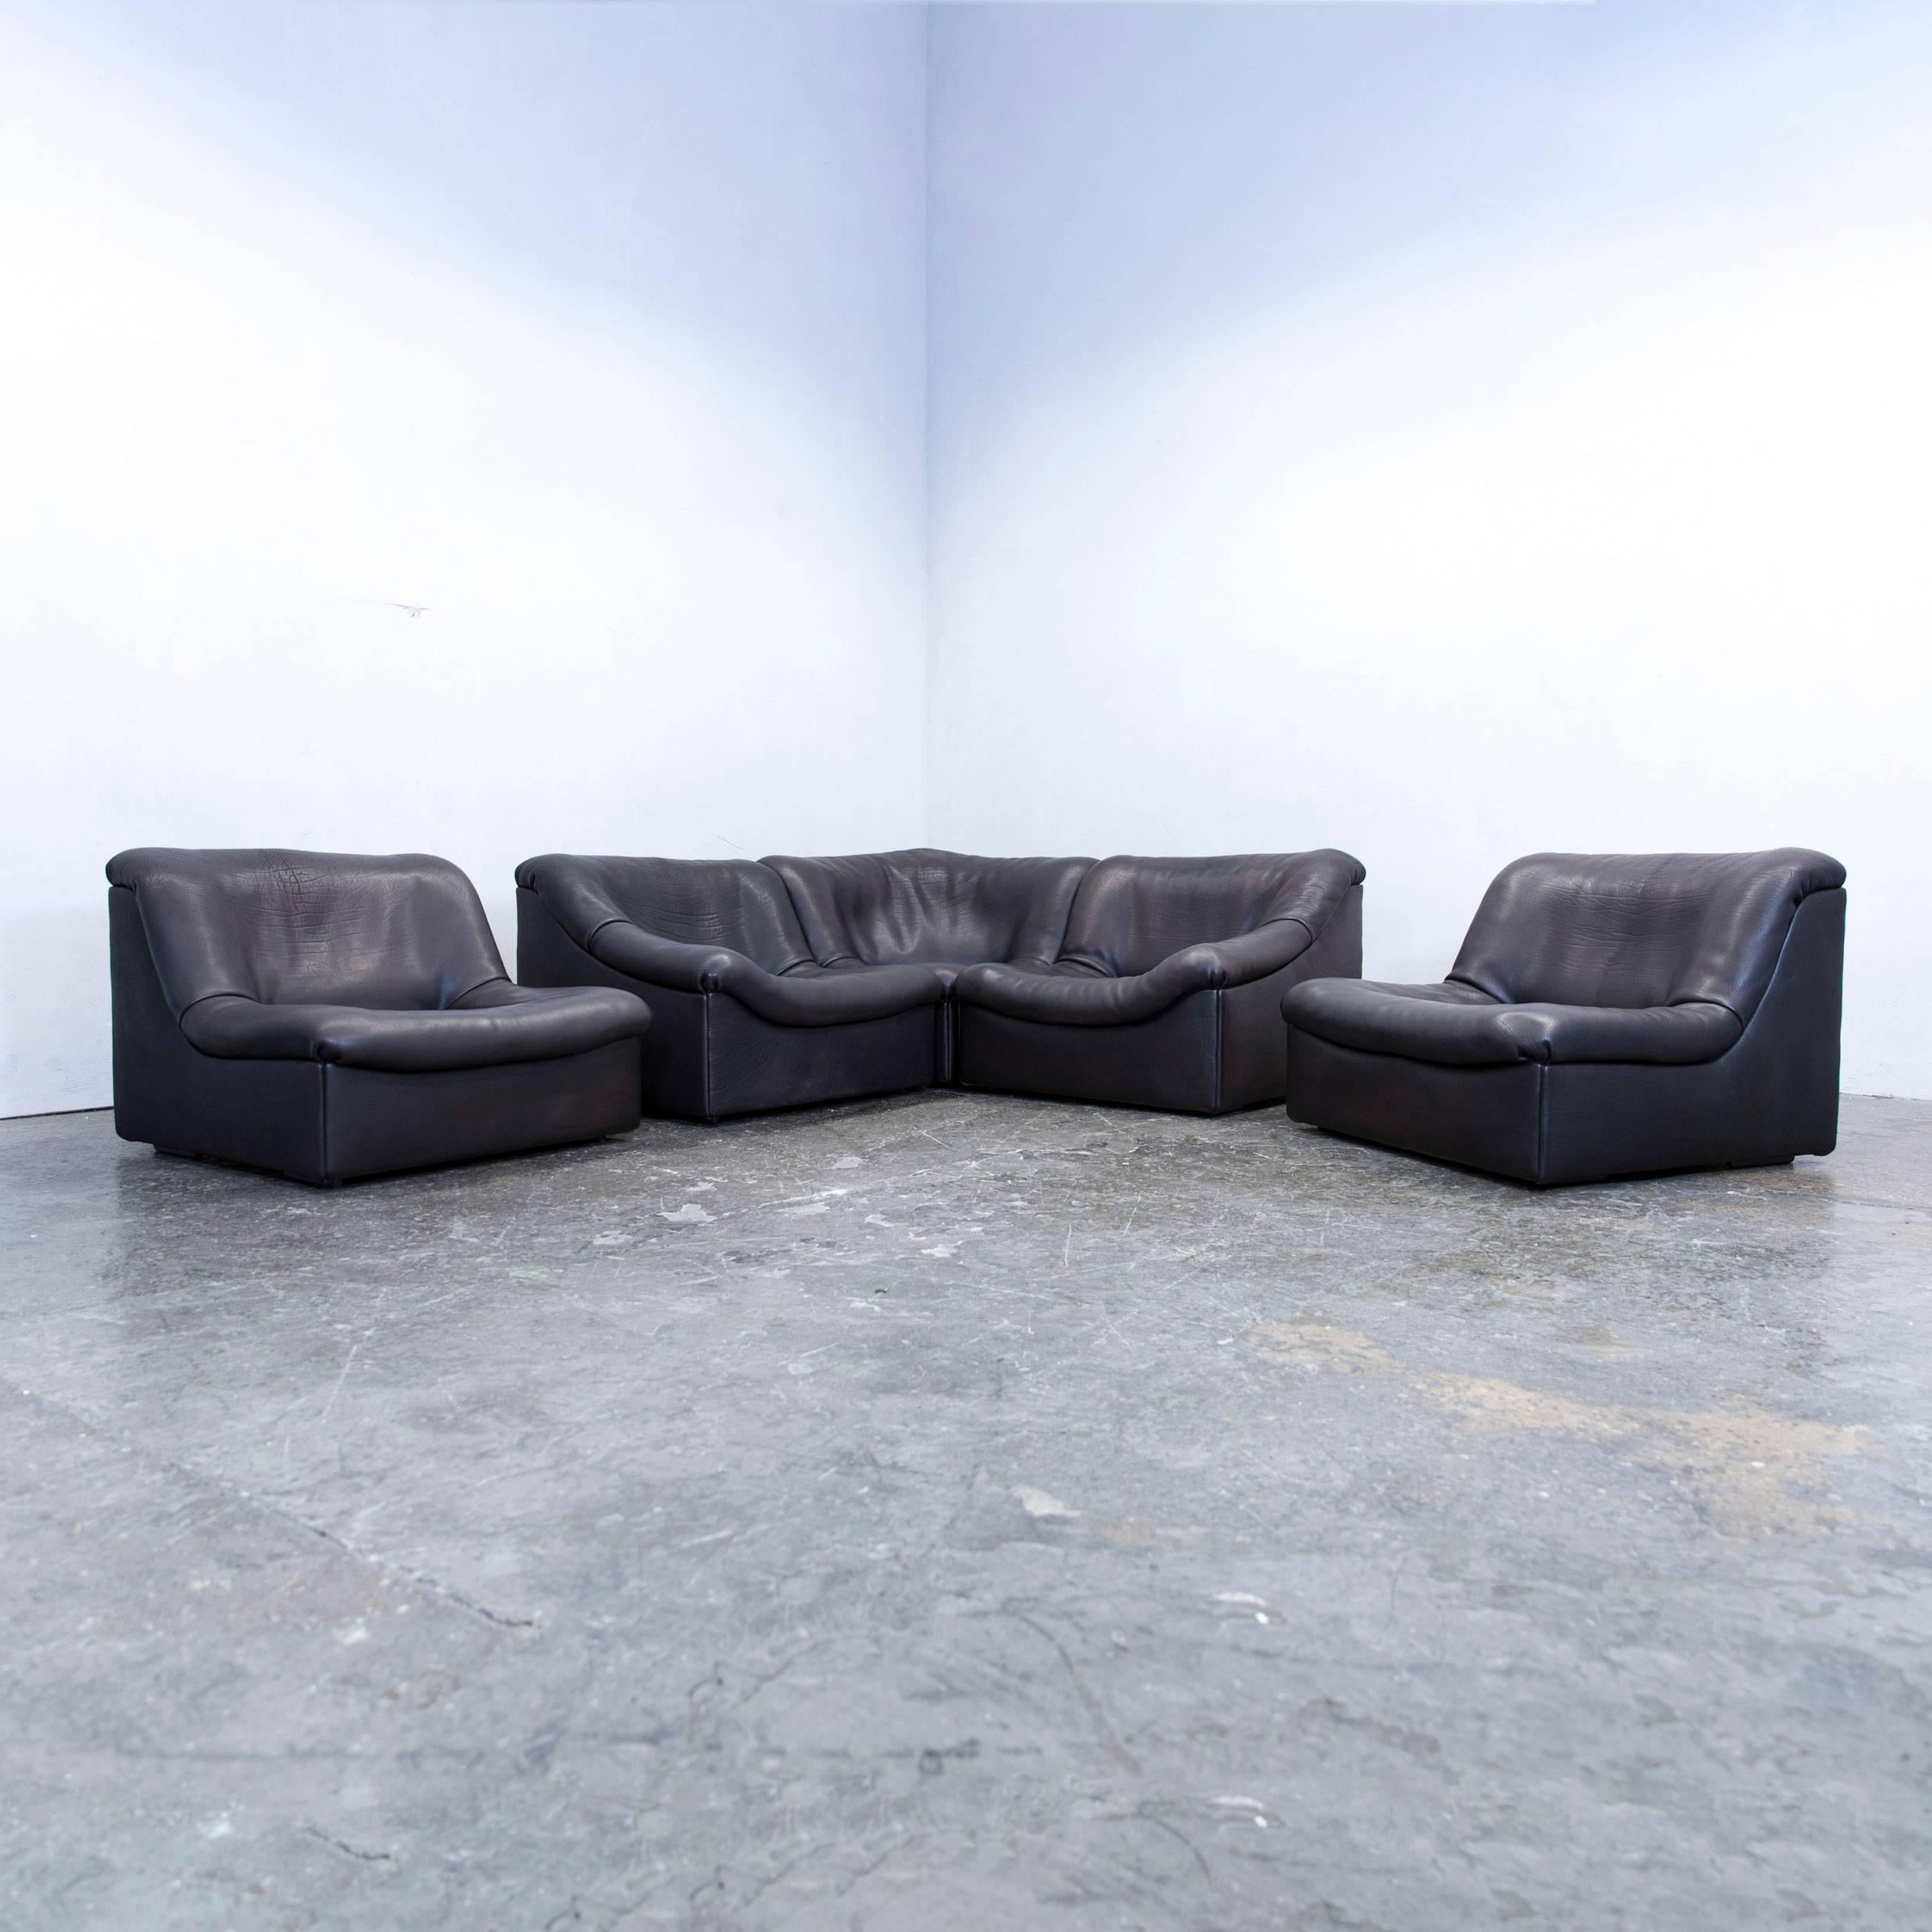 Swiss De Sede DS 46 Buff Leather Corner Sofa Brown Black Modular Function Couch Modern